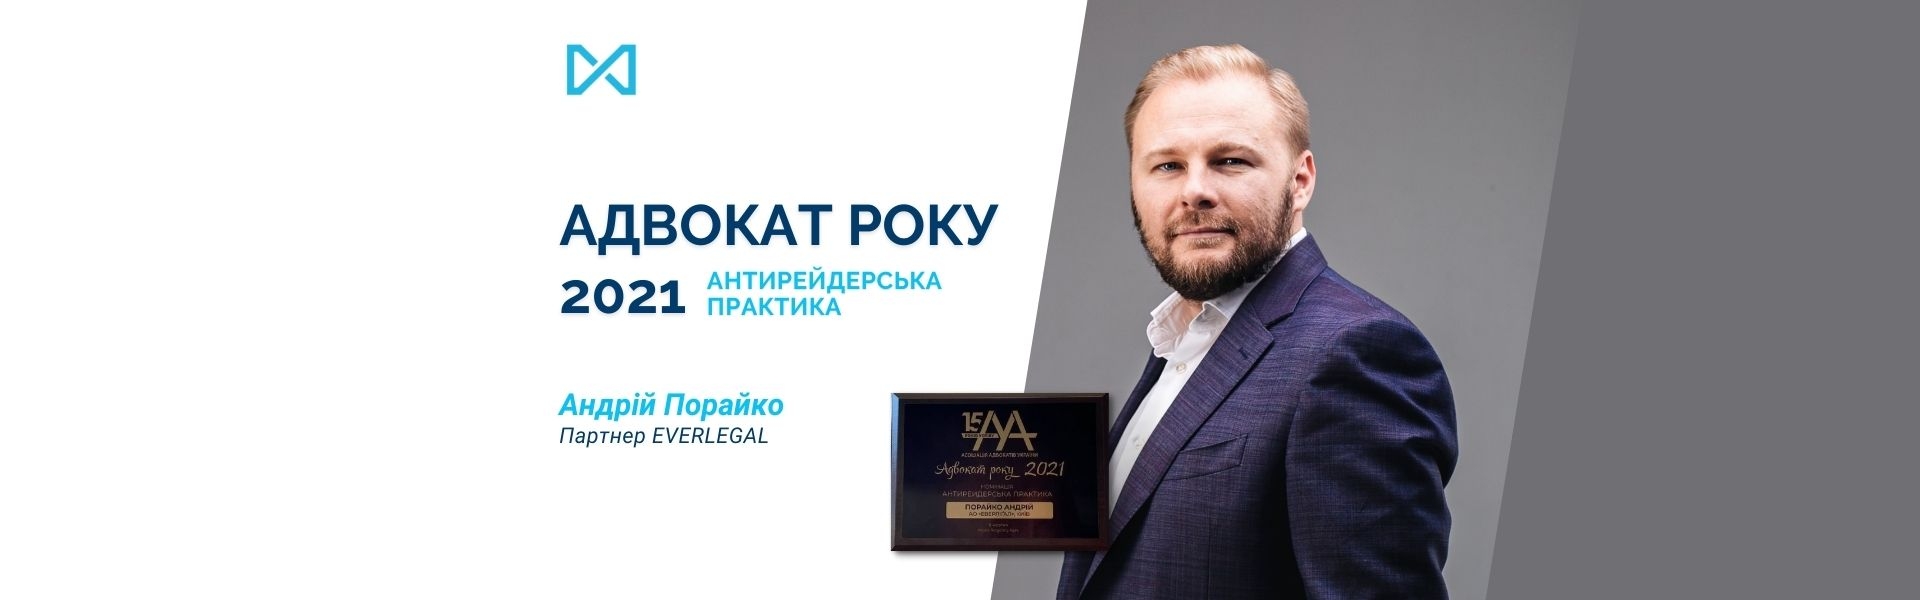 Andriy Porayko - Attorney of the Year 2021 in anti-raider practice